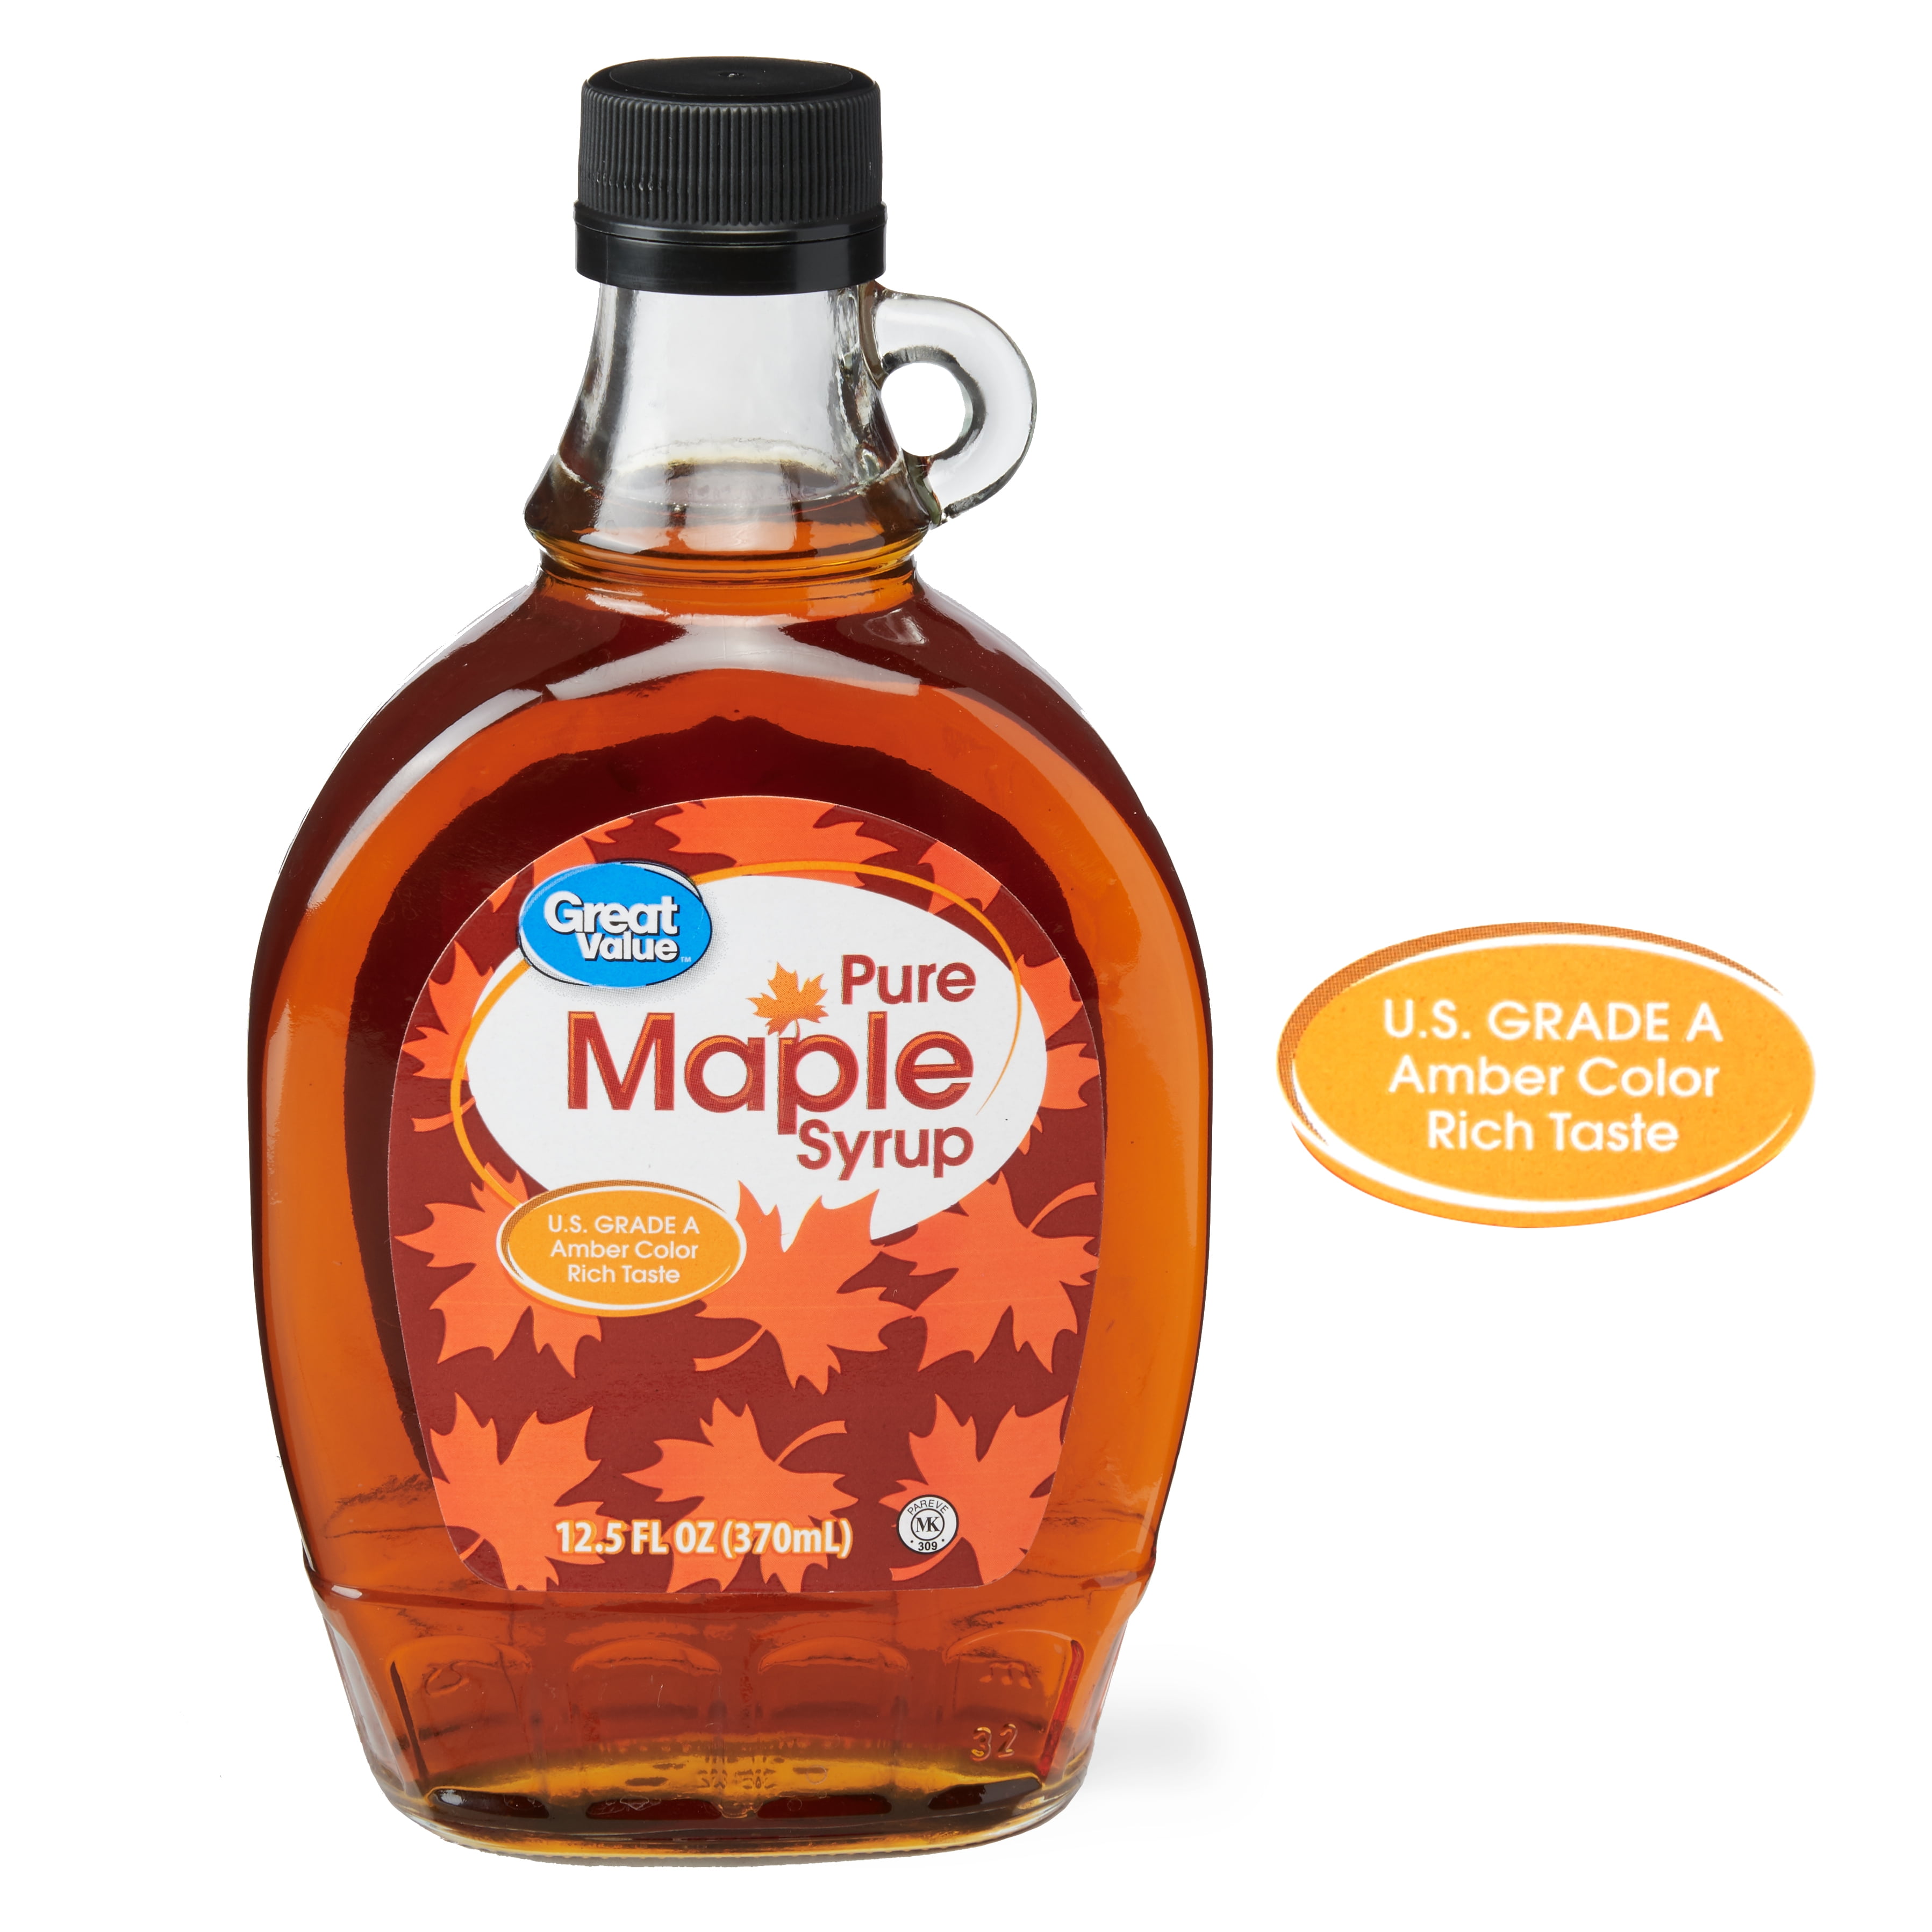 Great Value Pure Maple Syrup 12 5 Fl Oz Walmart Com Walmart Com